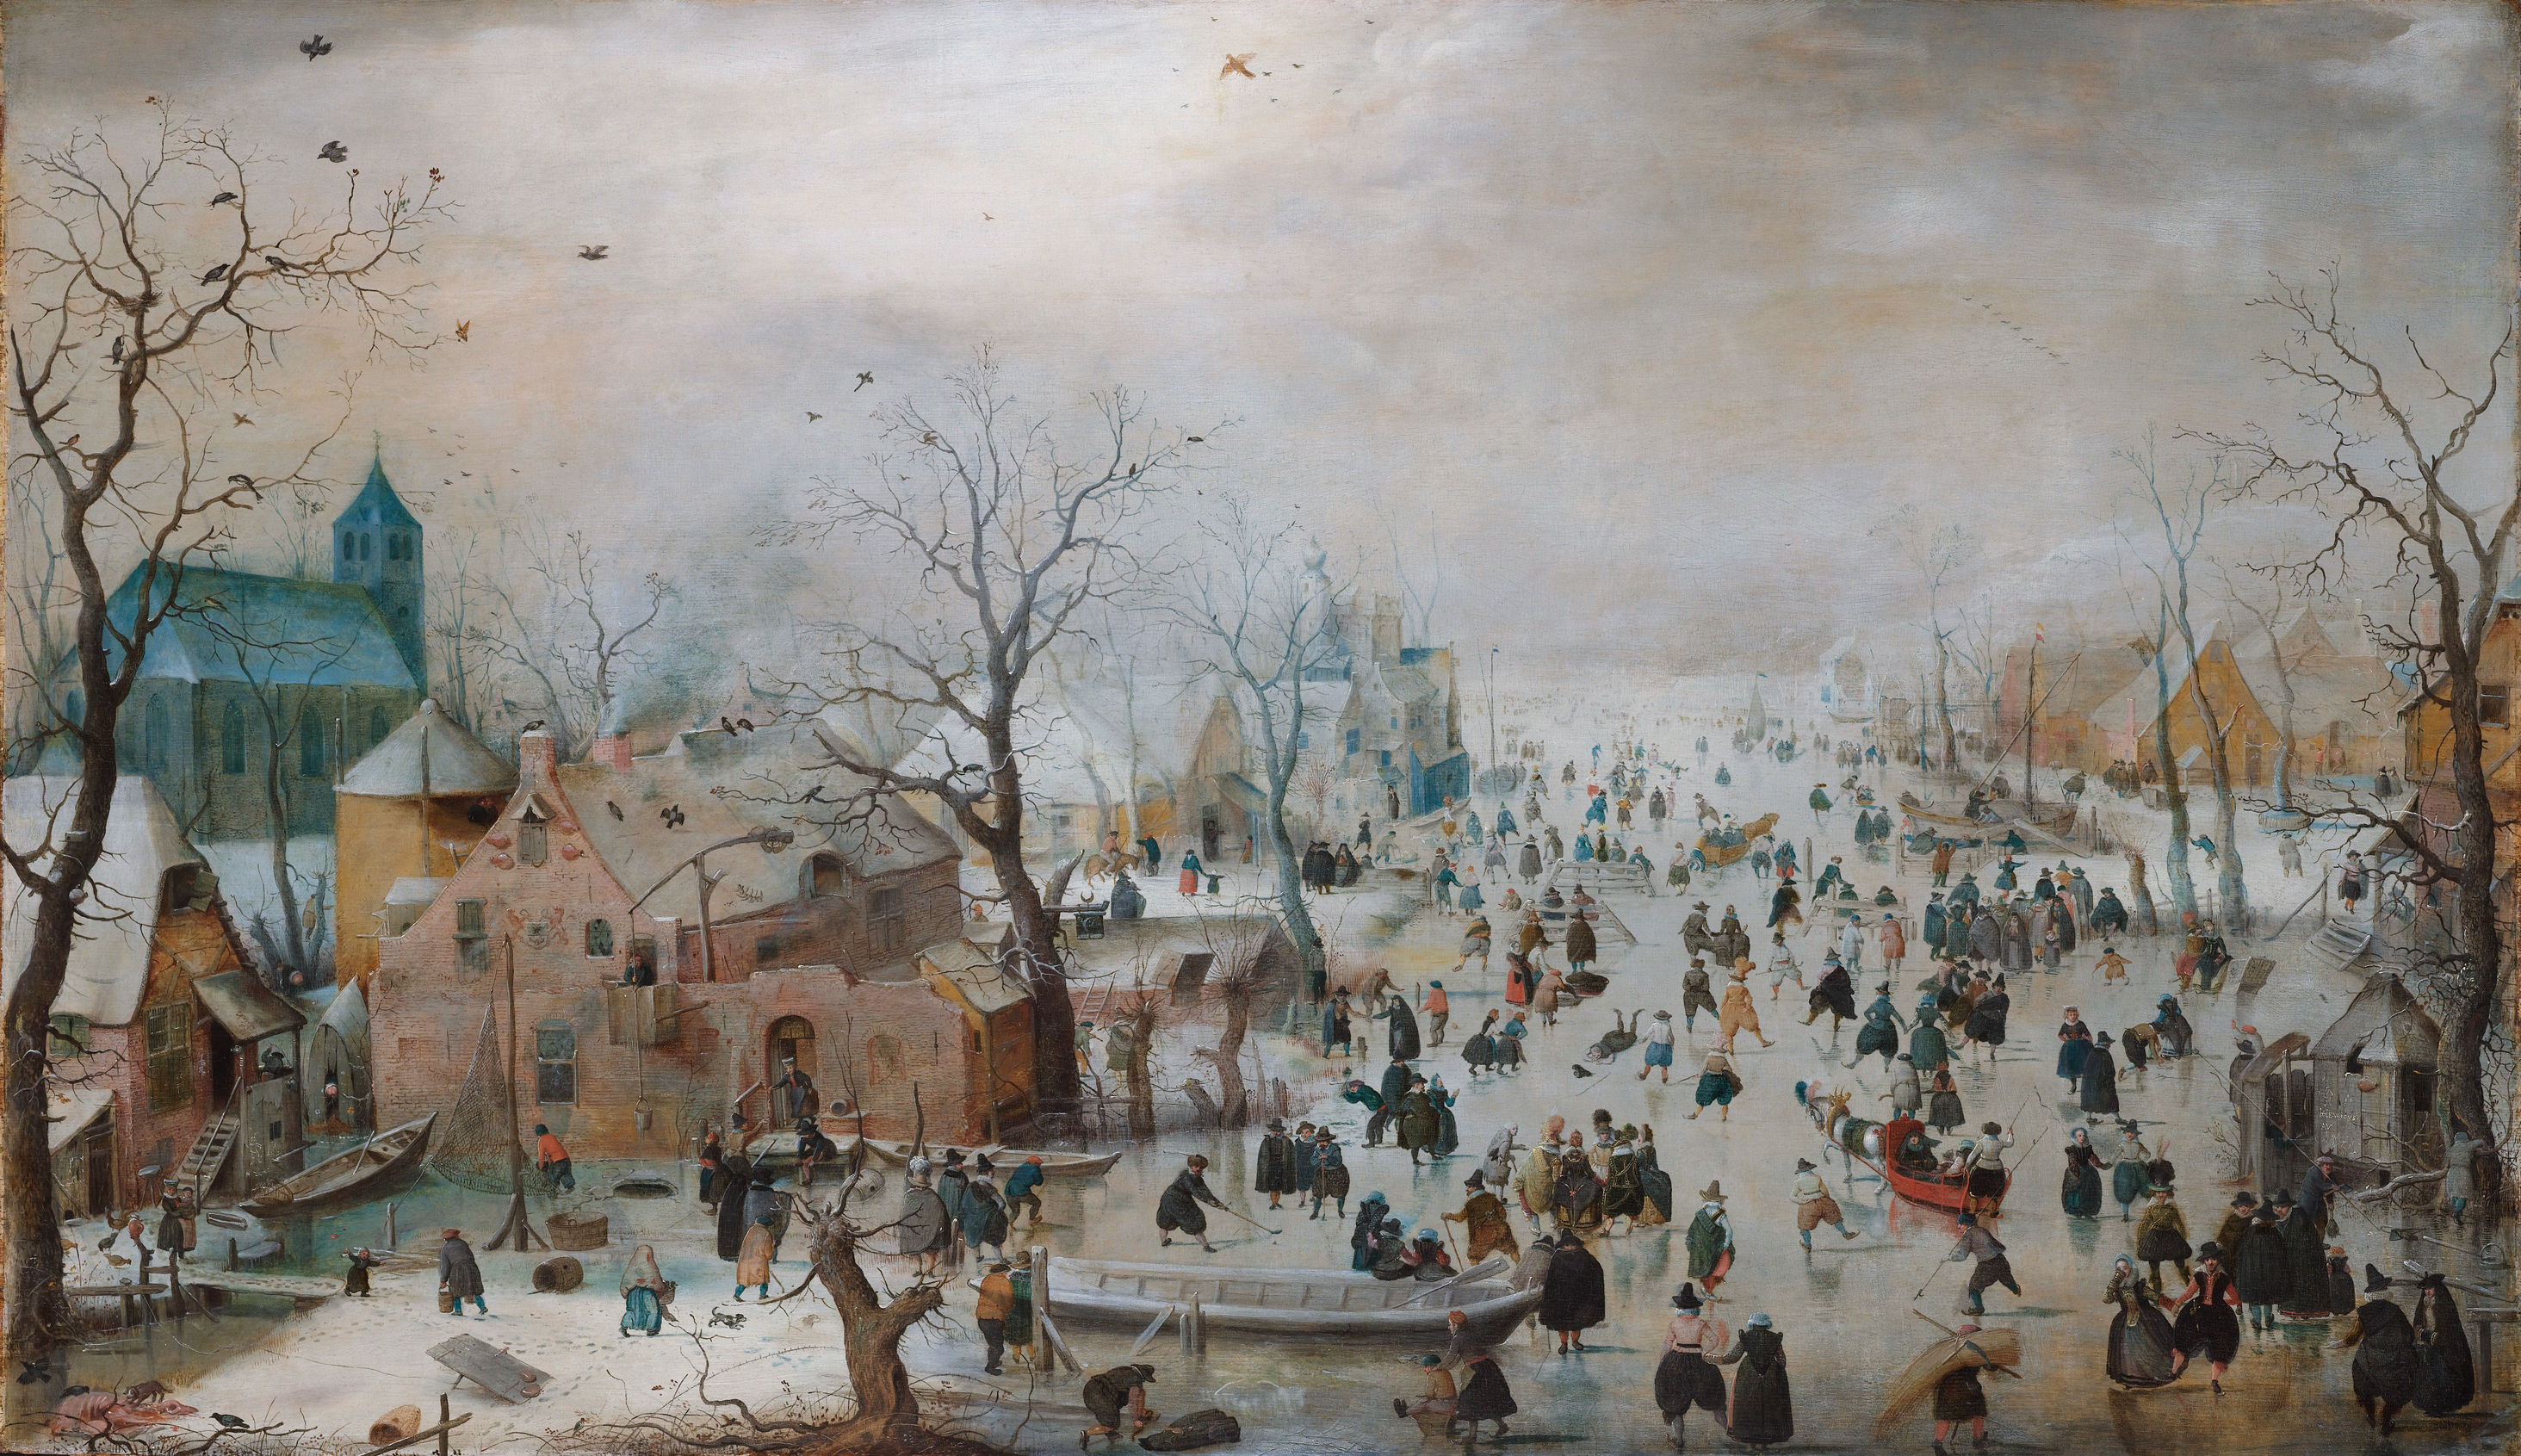 Ice Skating by Hendrick Avercamp - 1615 - 77.3 x 131.9cm Rijksmuseum